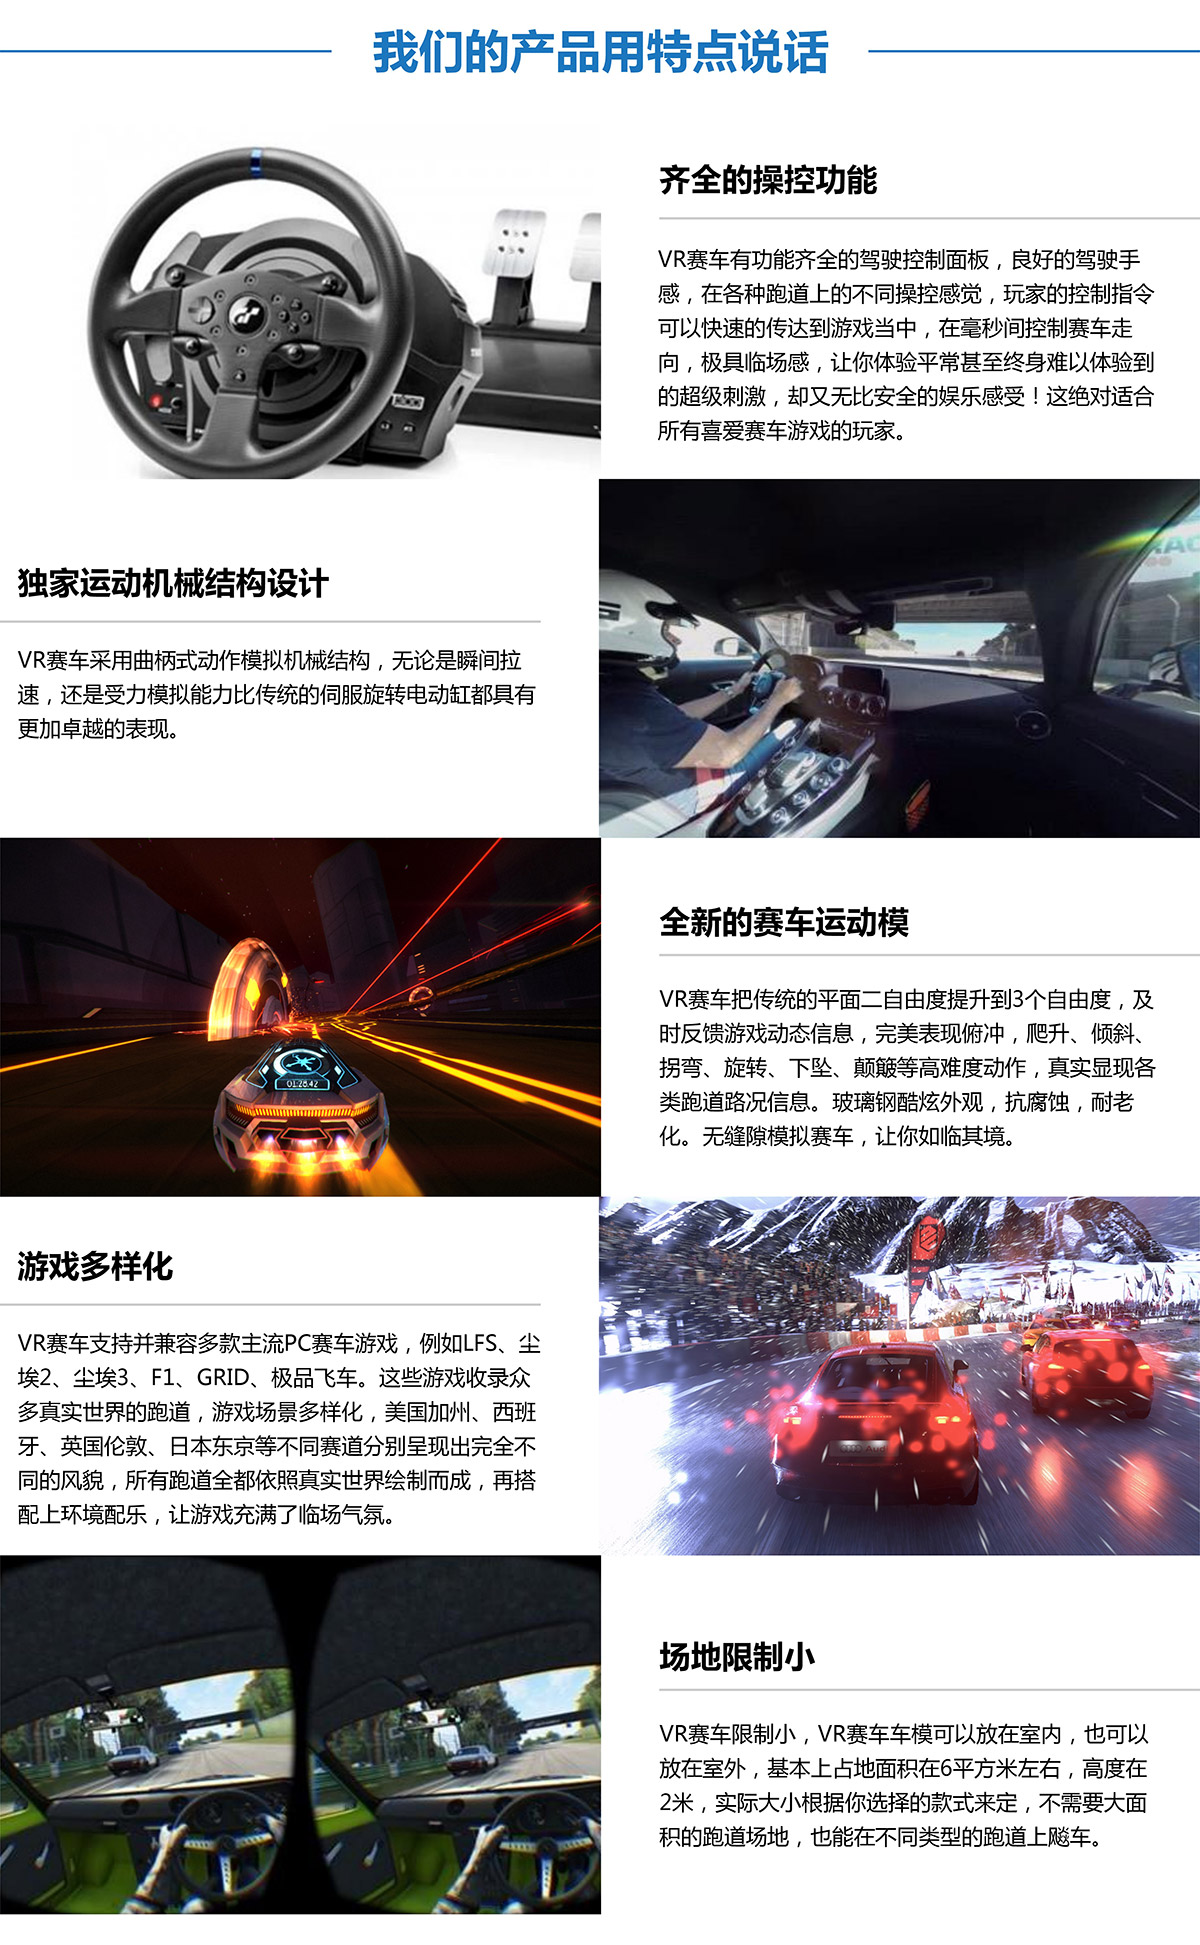 VR台风虚拟VR赛车产品用特点说话.jpg